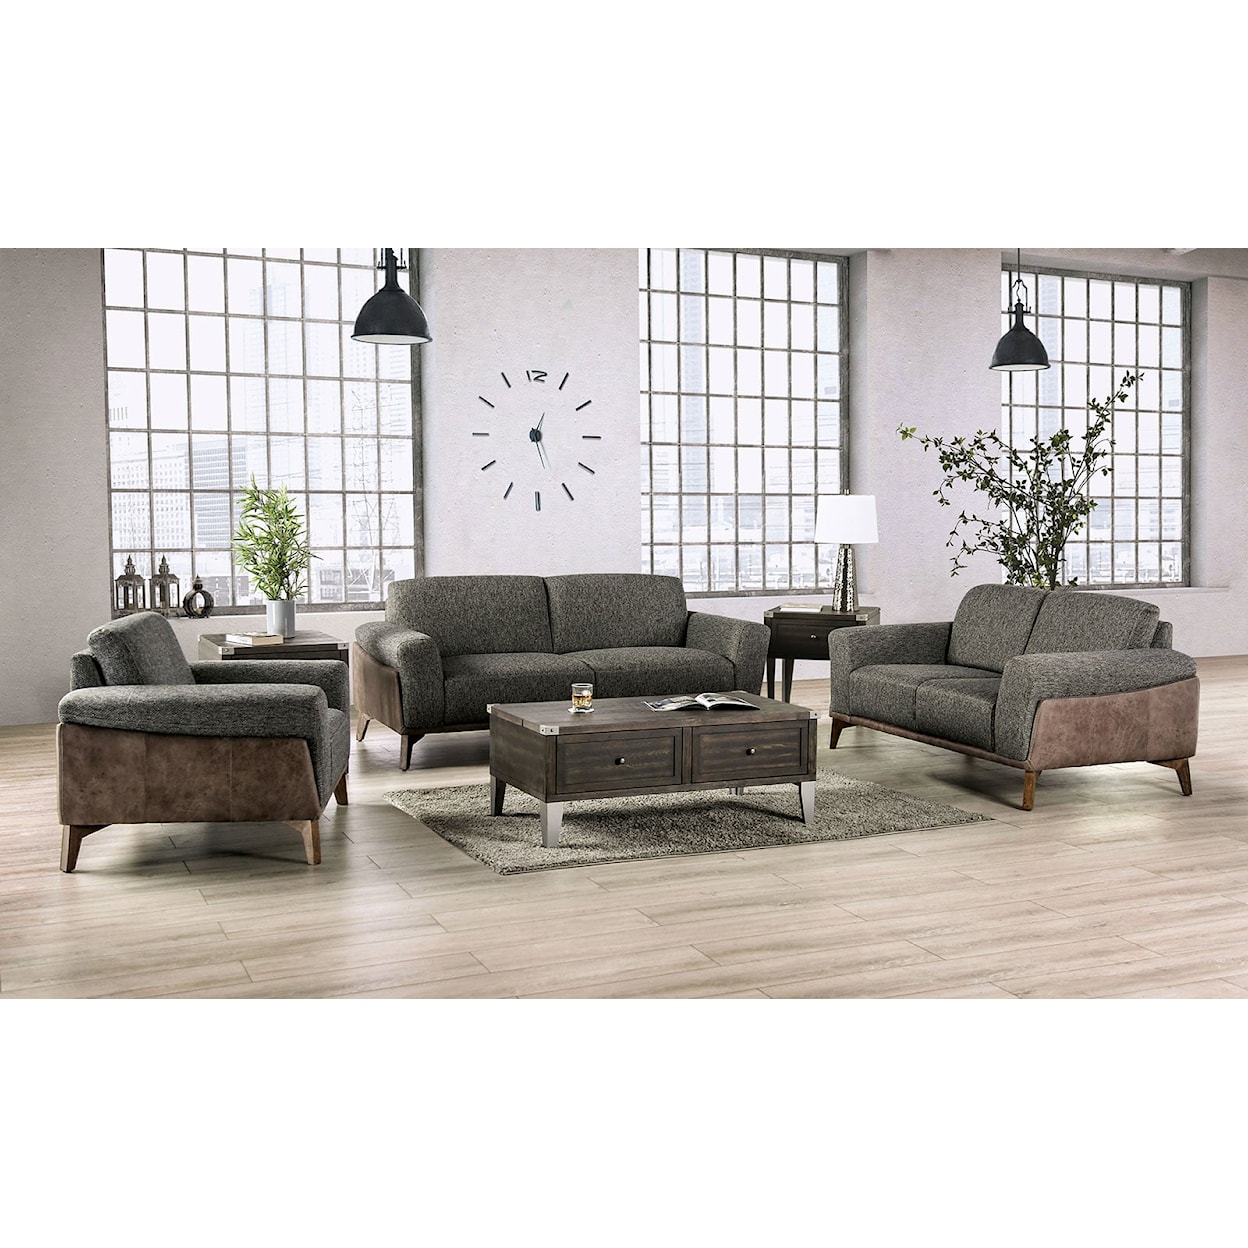 Furniture of America Kloten Sofa and Loveseat Set